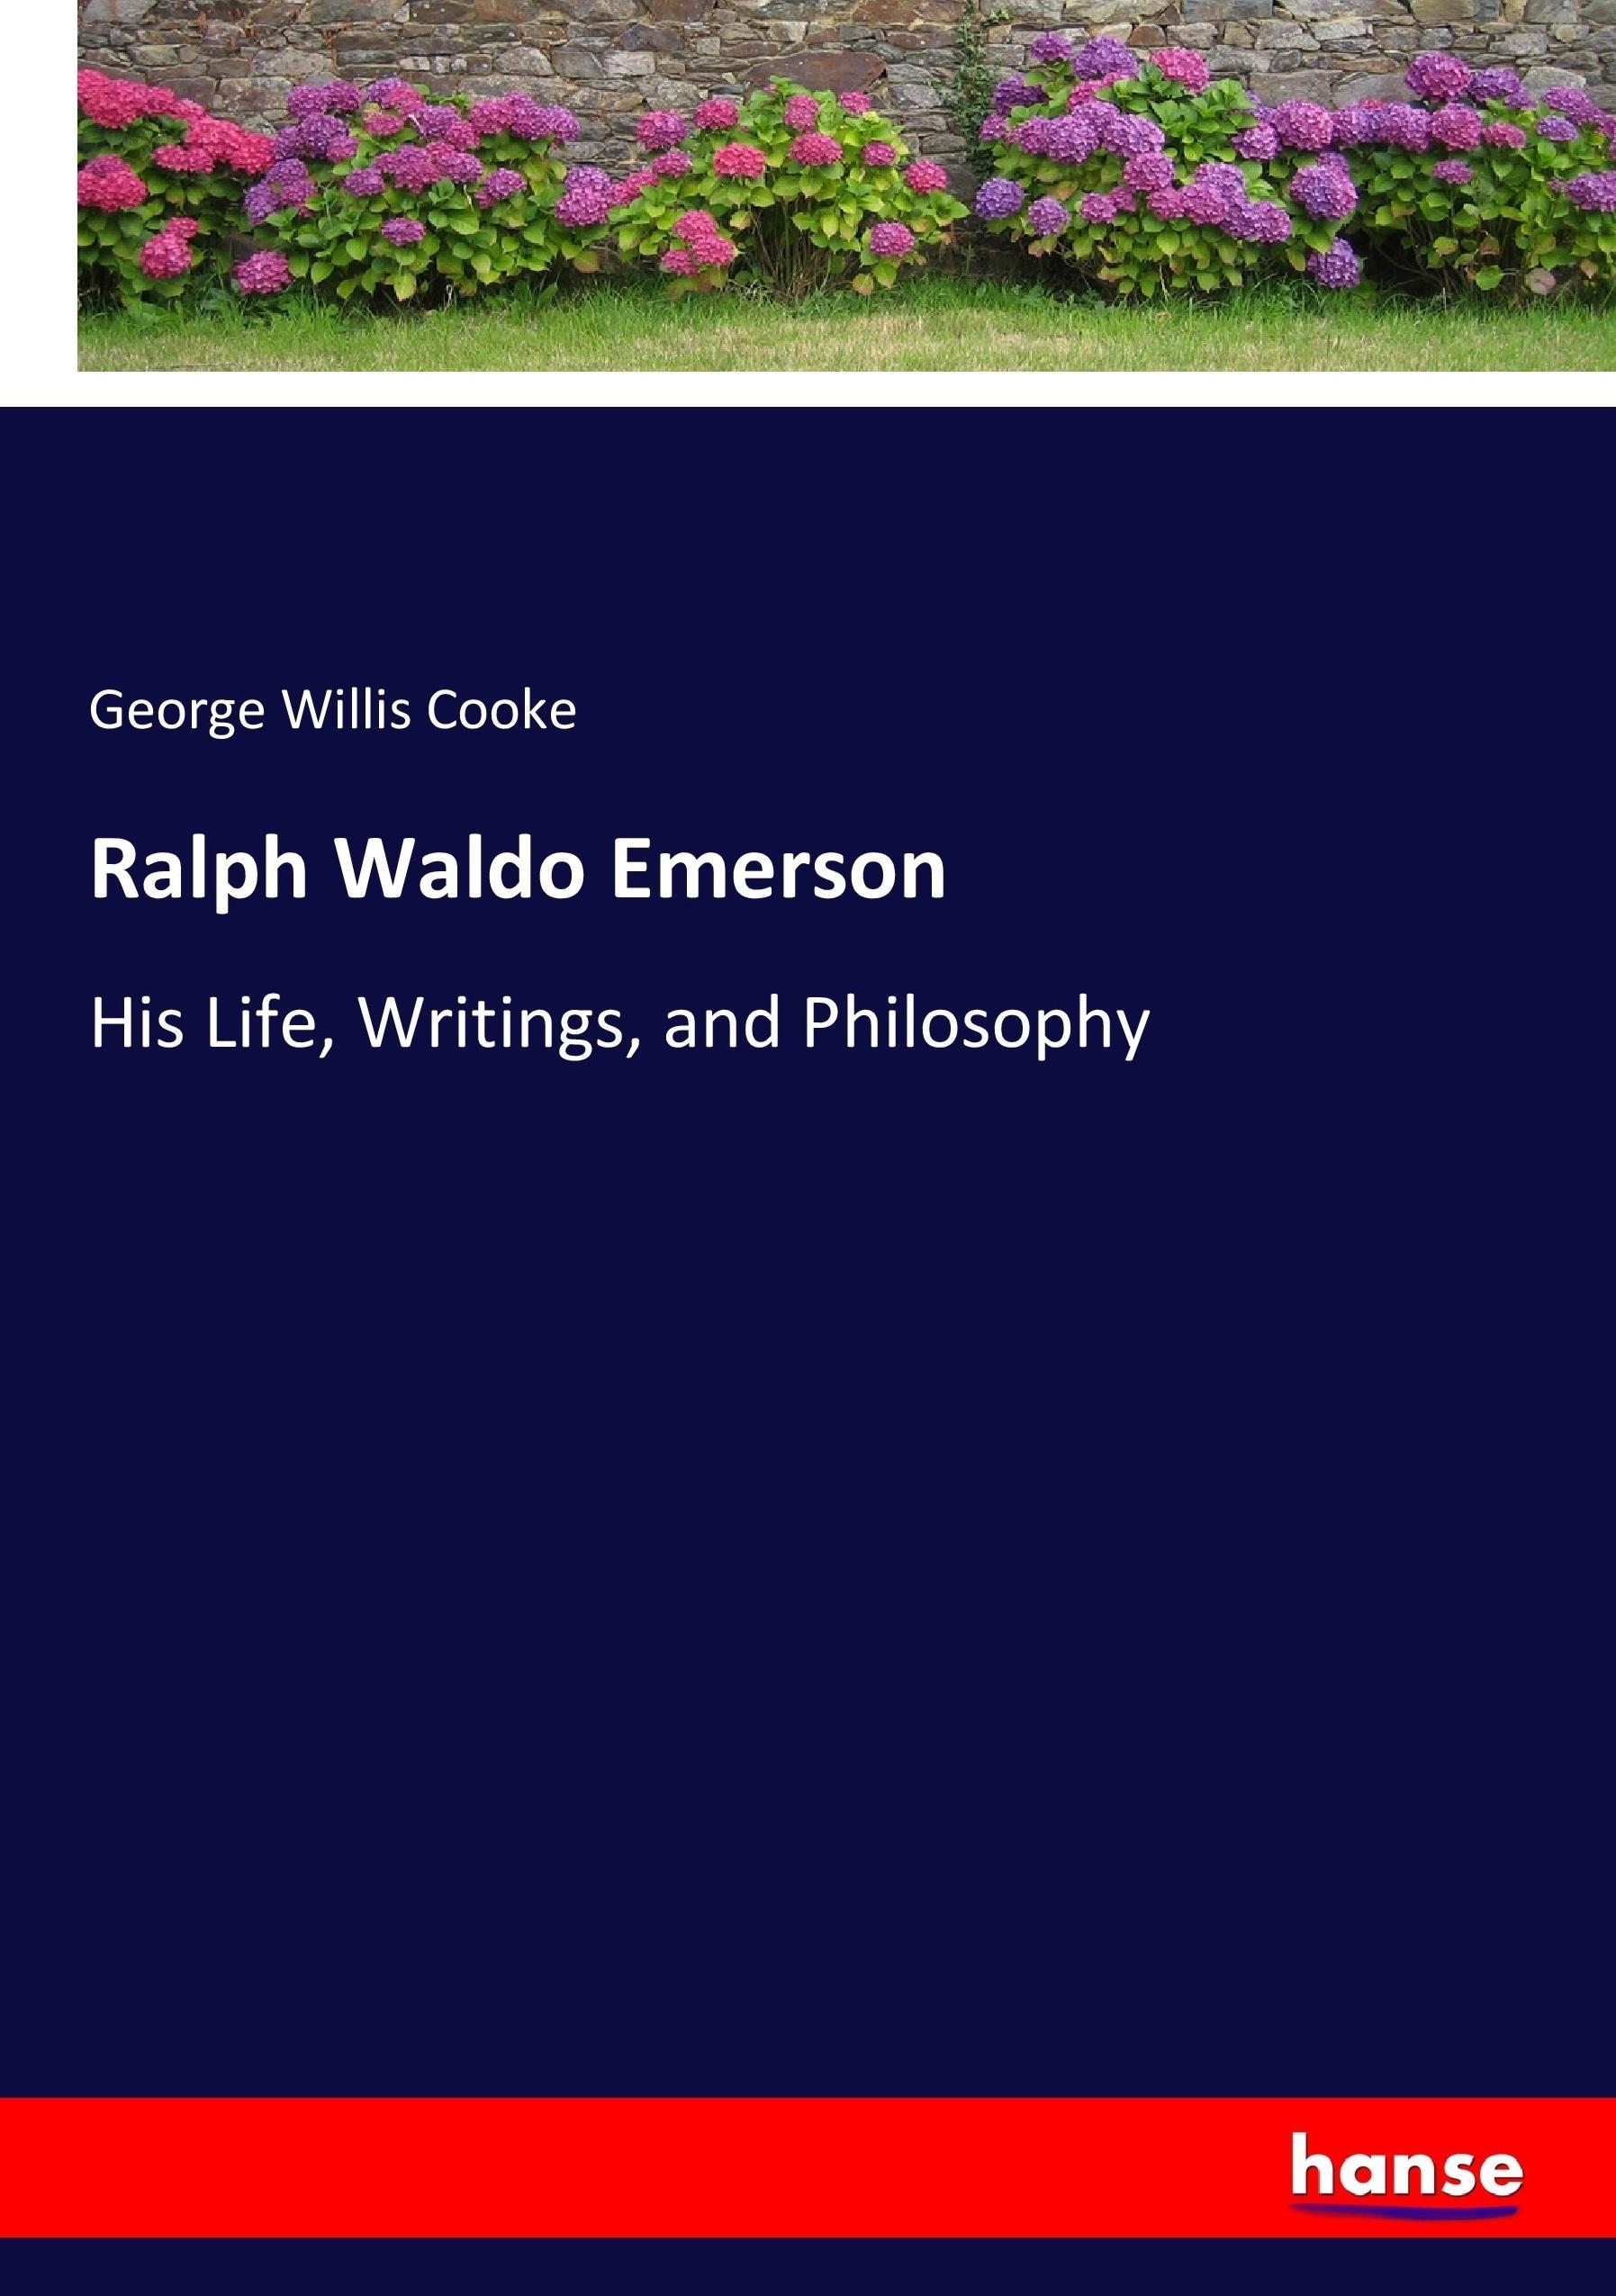 Ralph Waldo Emerson - Cooke, George Willis